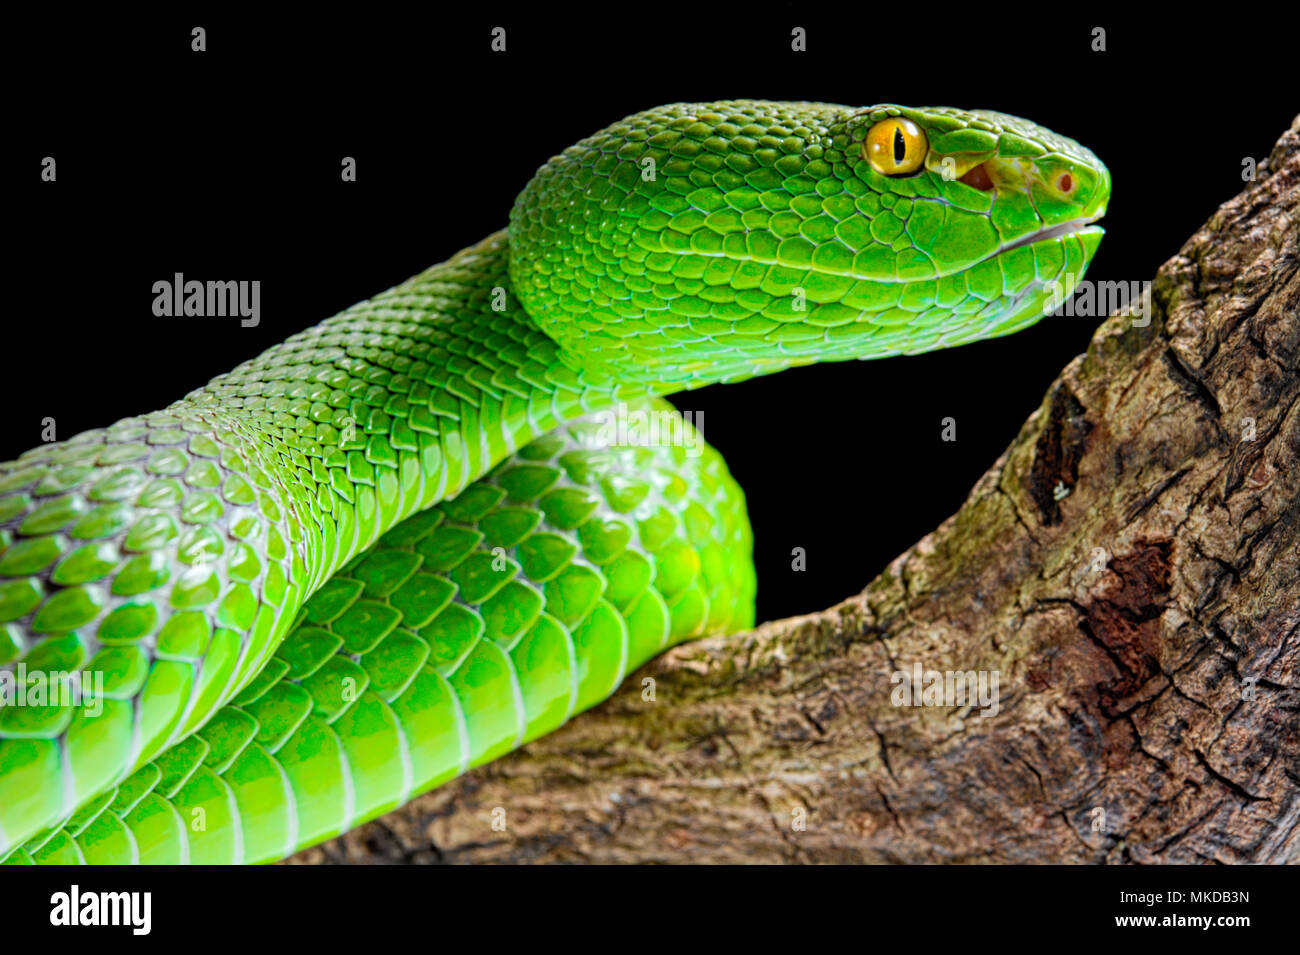 Portrait of Green Pit Viper (Trimeresurus albolabris) on black background Stock Photo